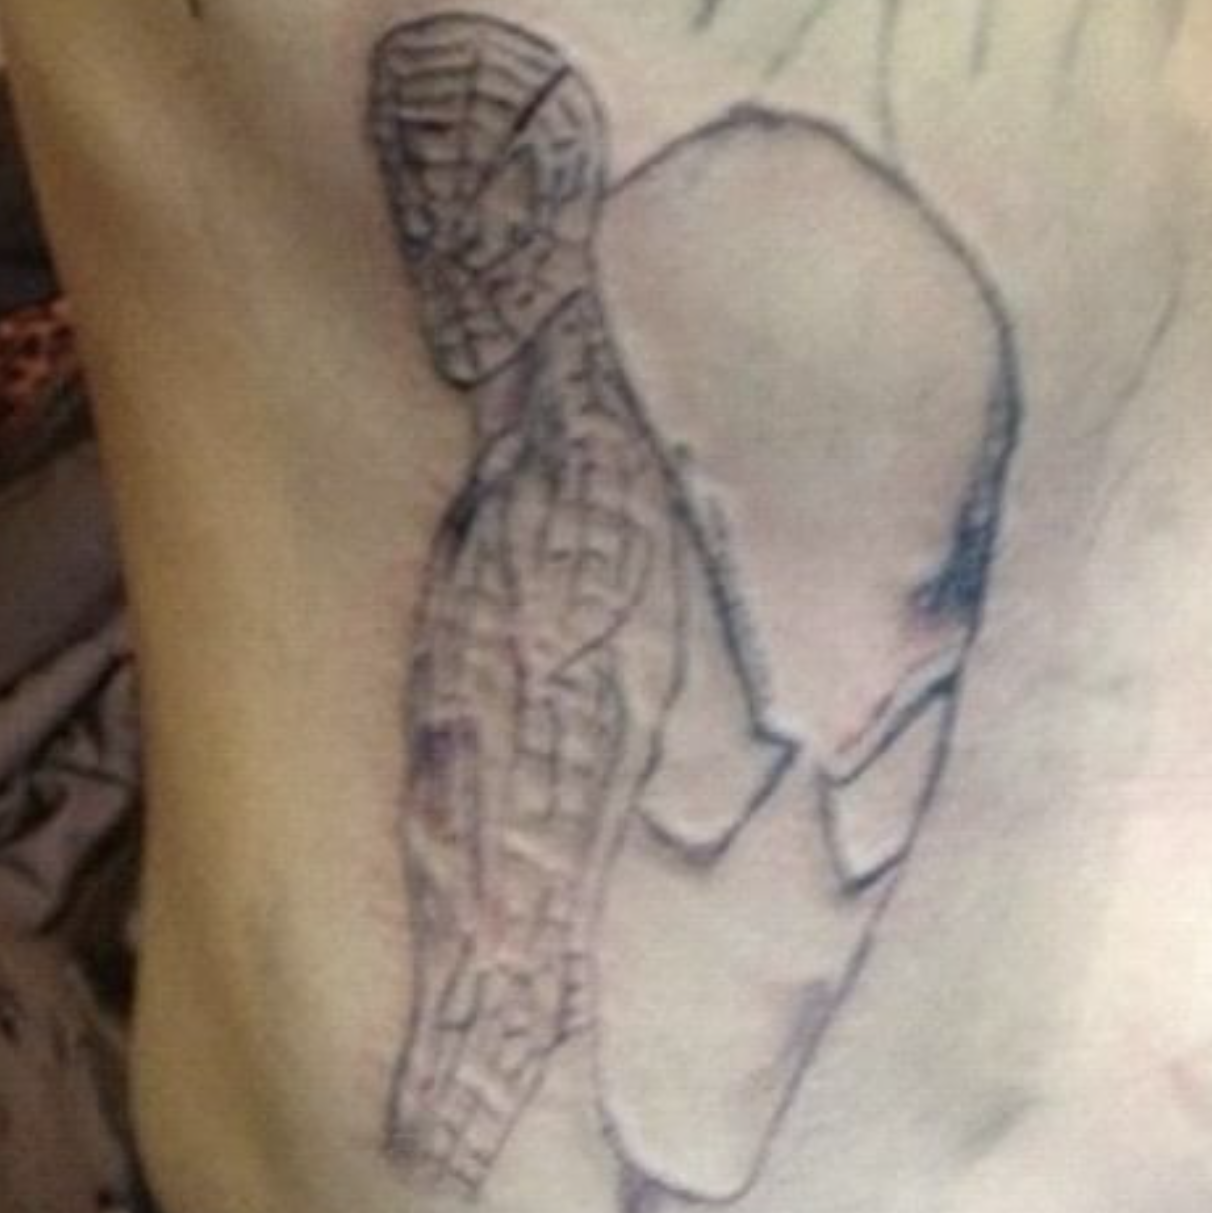 Bad Tattoos - bad spider man tattoo